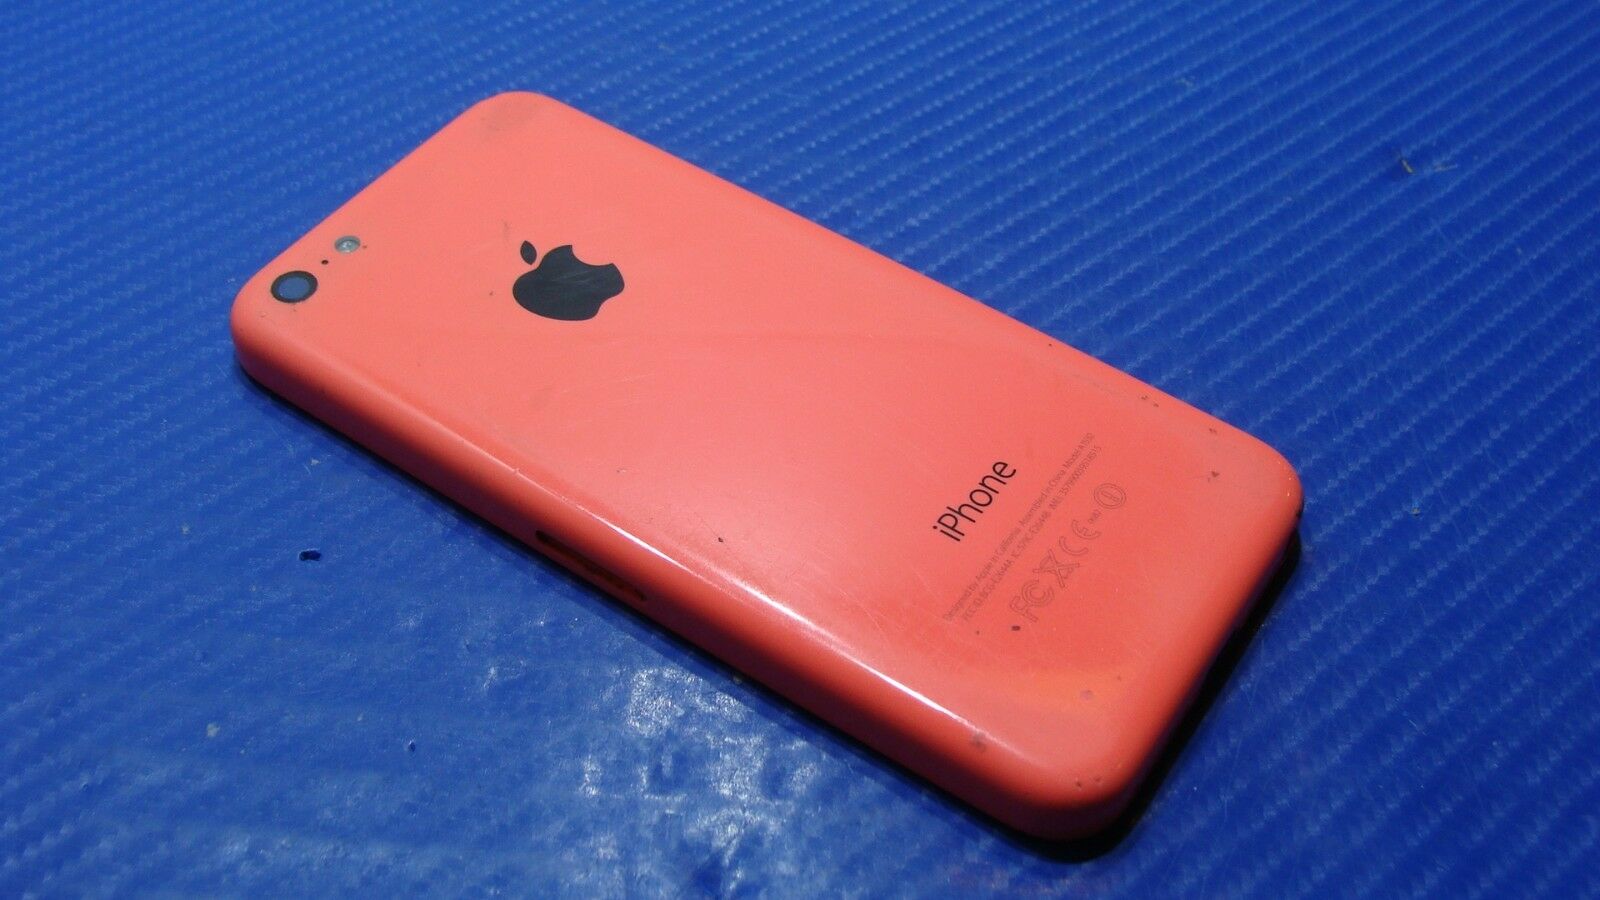 Apple iPhone 5c A1532 4